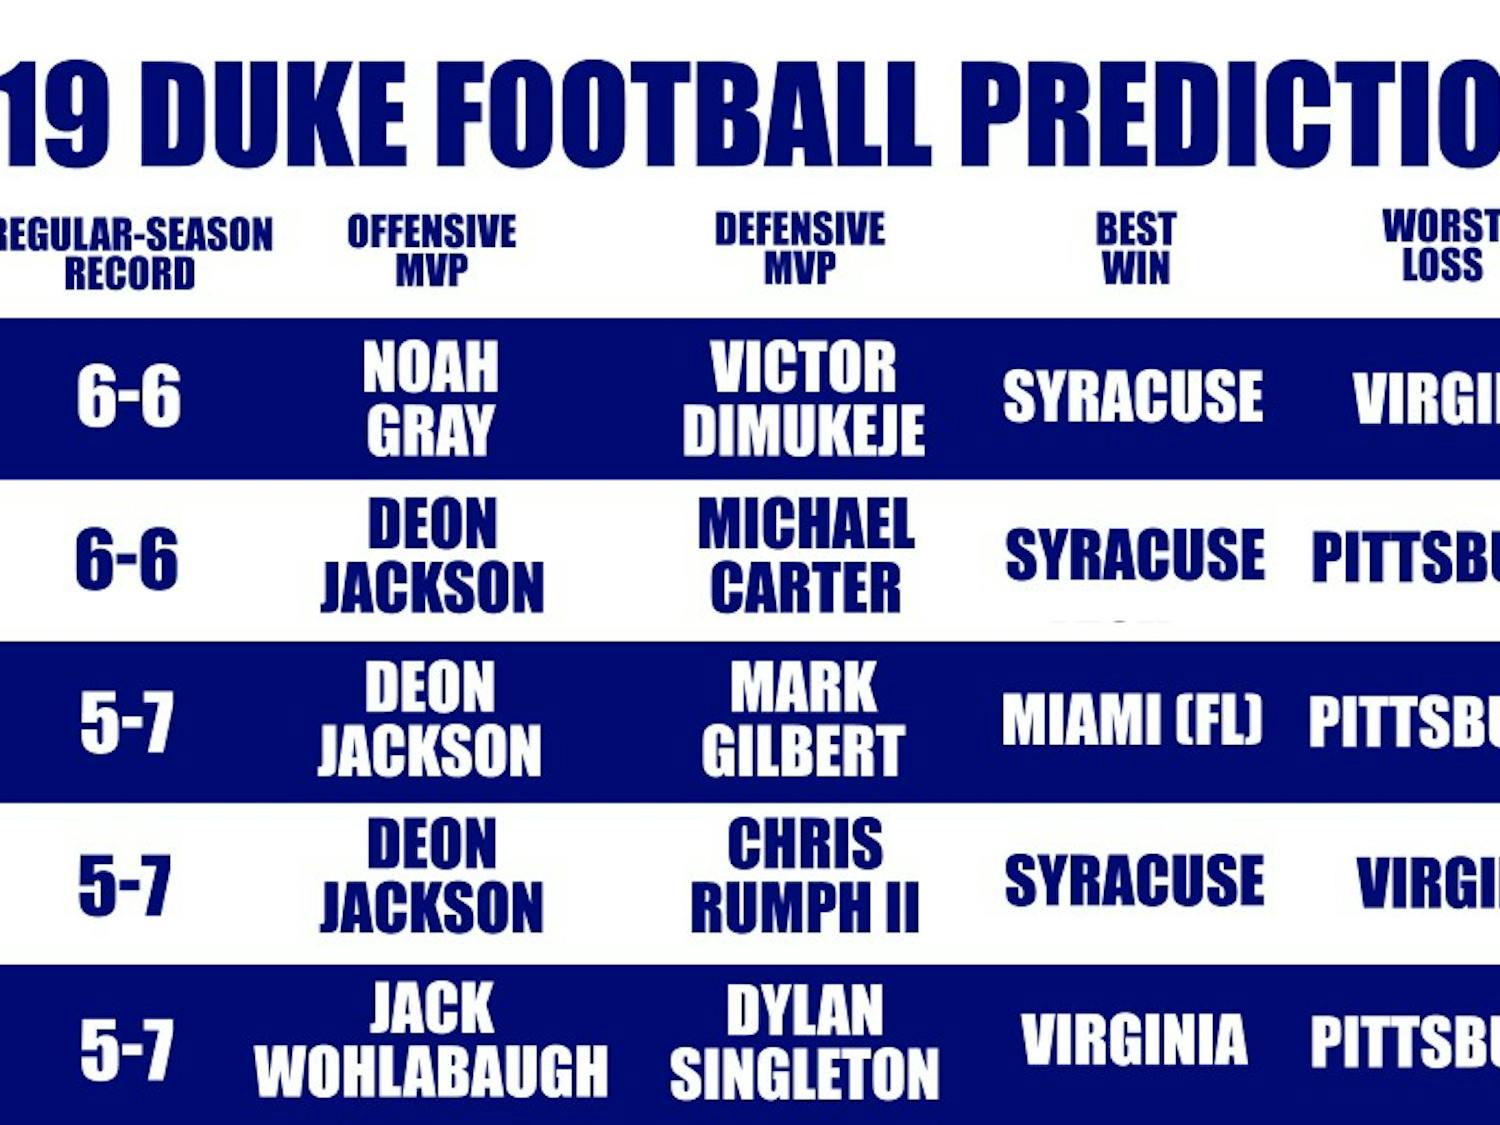 The Chronicle's football beats give their predictions for Duke's 2019 season